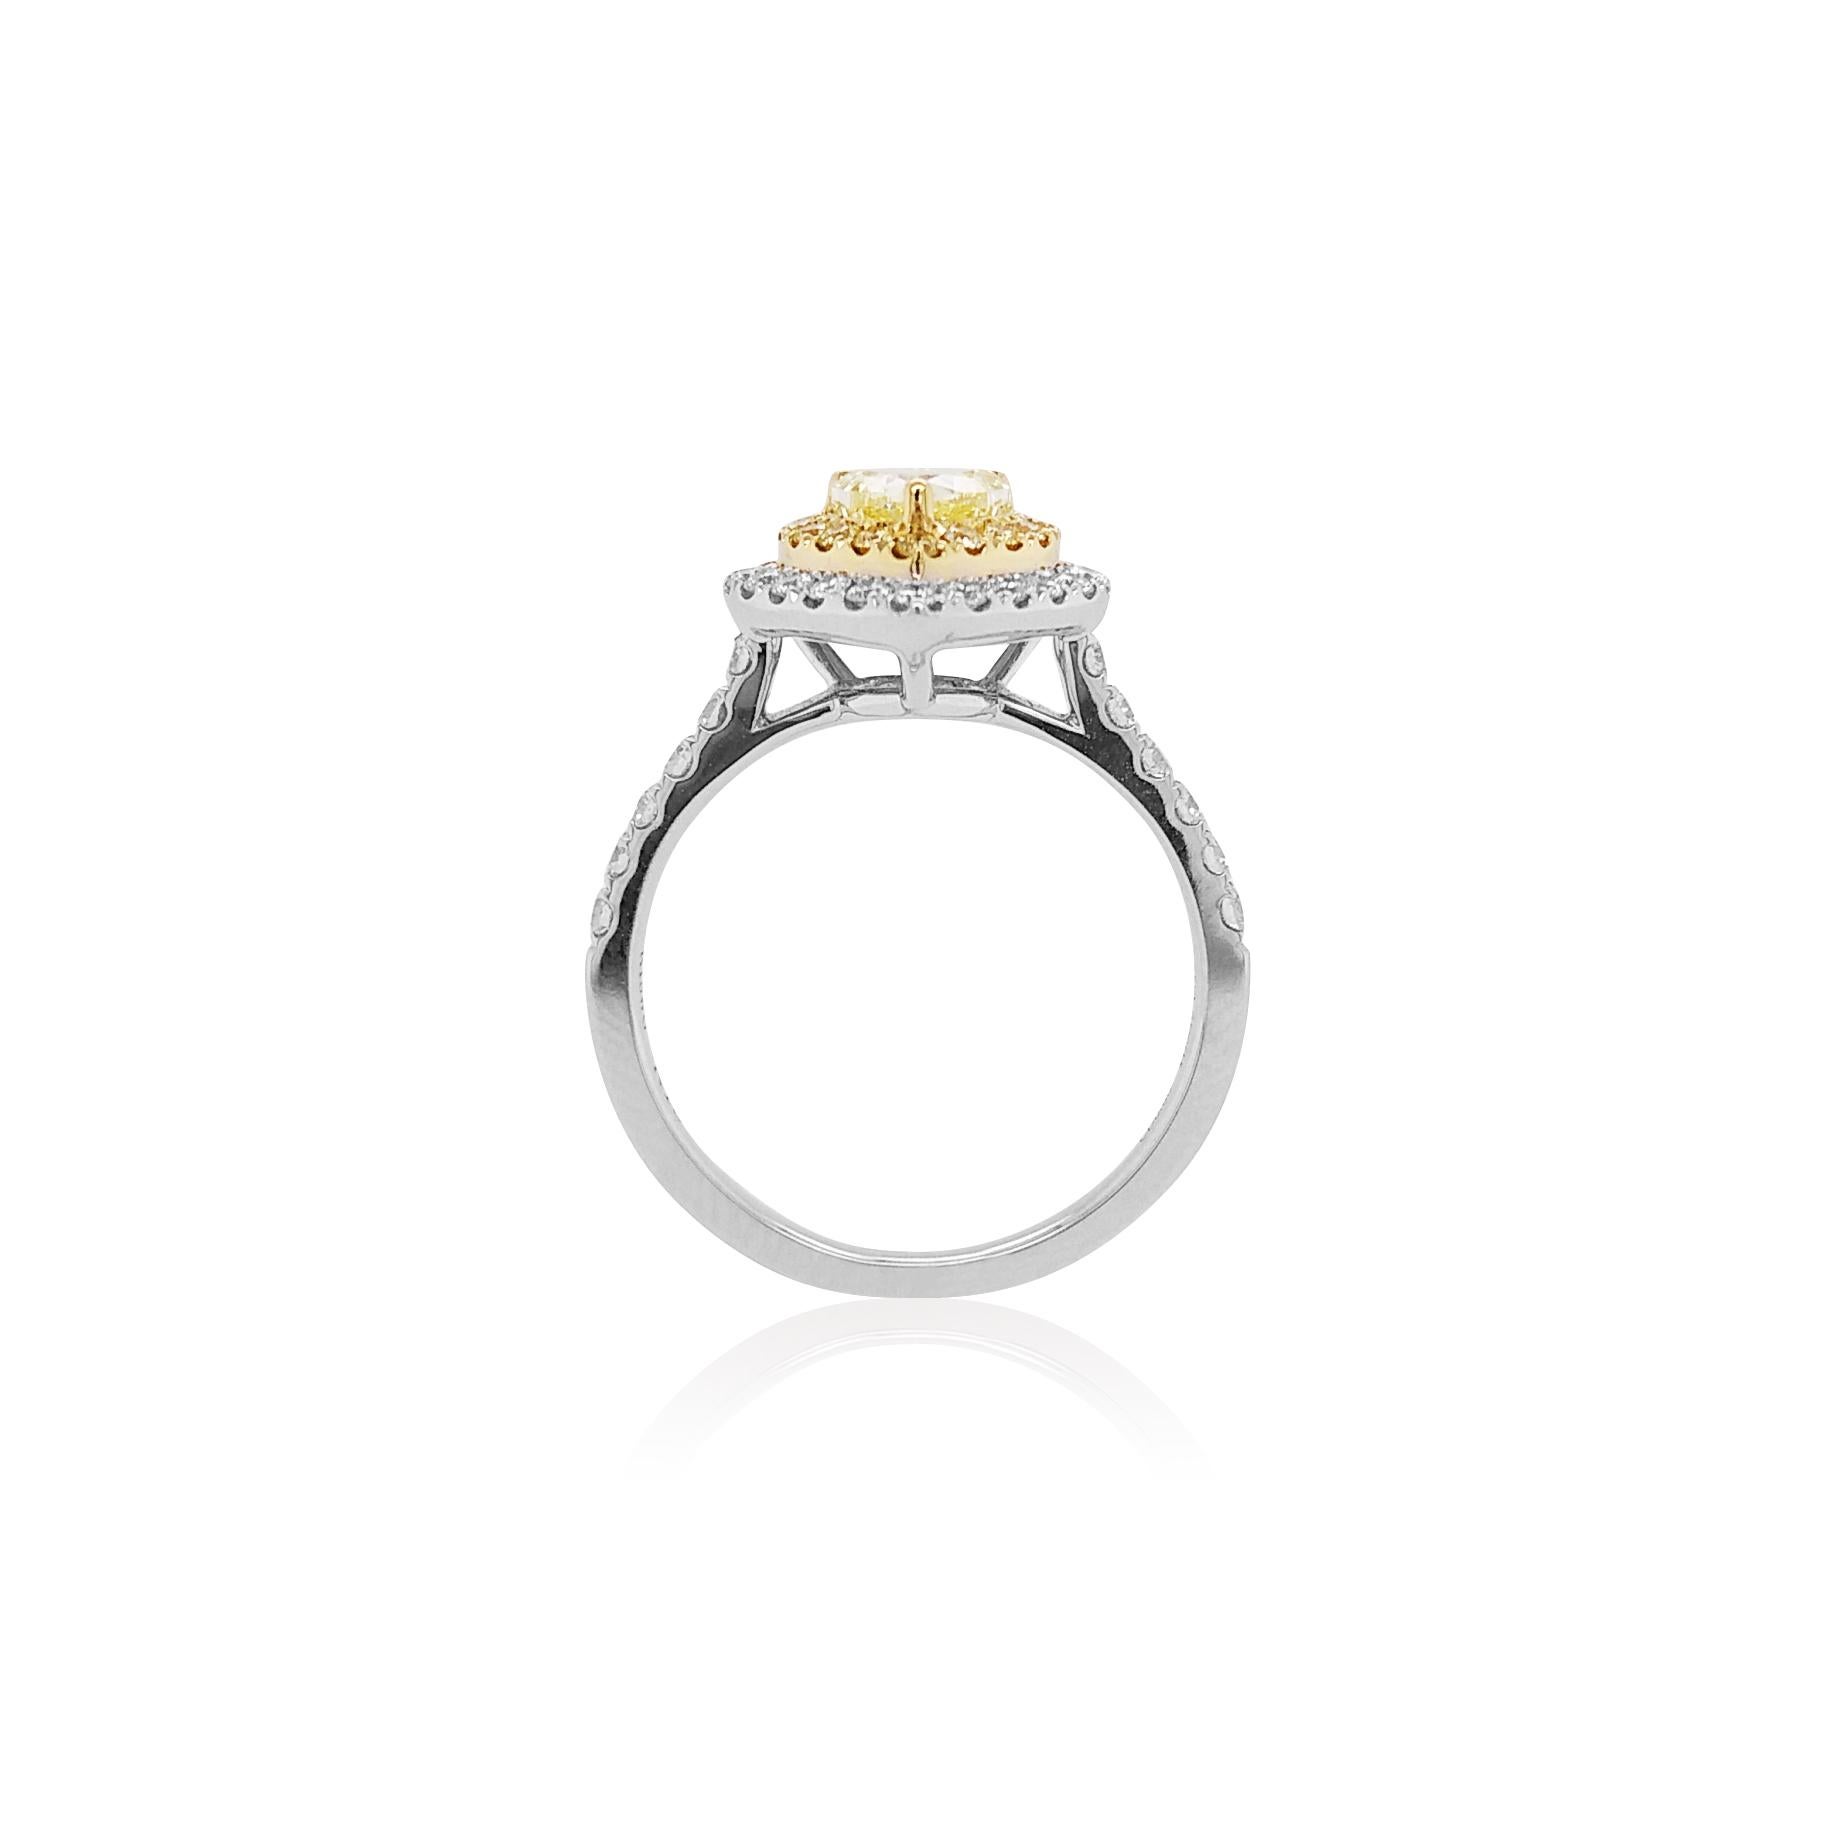 Contemporary GIA Certified Fancy Yellow Diamond and White Diamond Ring in 18 Karat White Gold